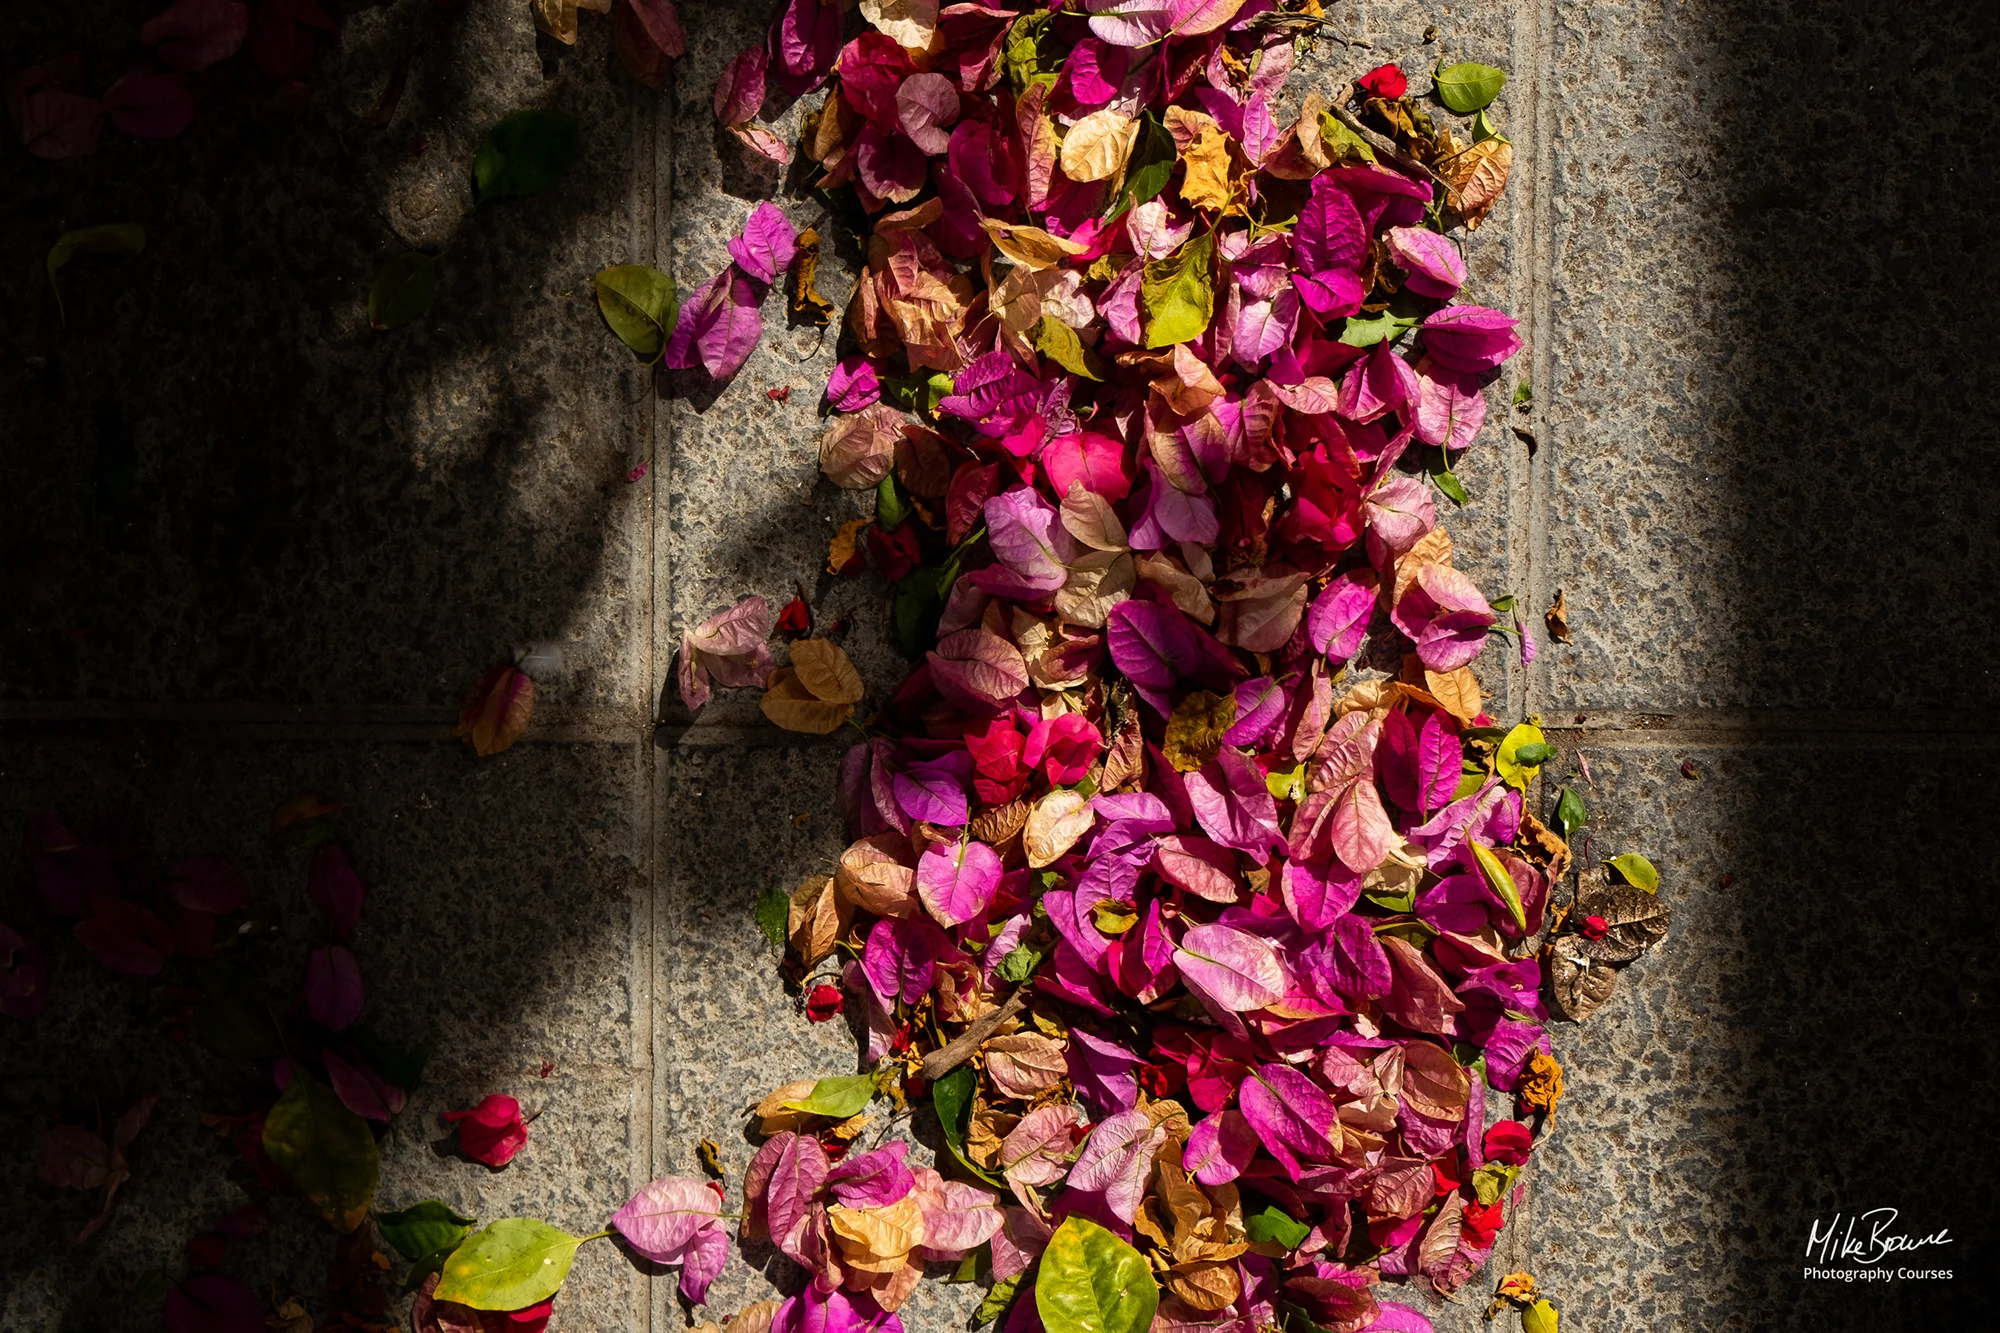 Row of fallen petals between two dark shadows